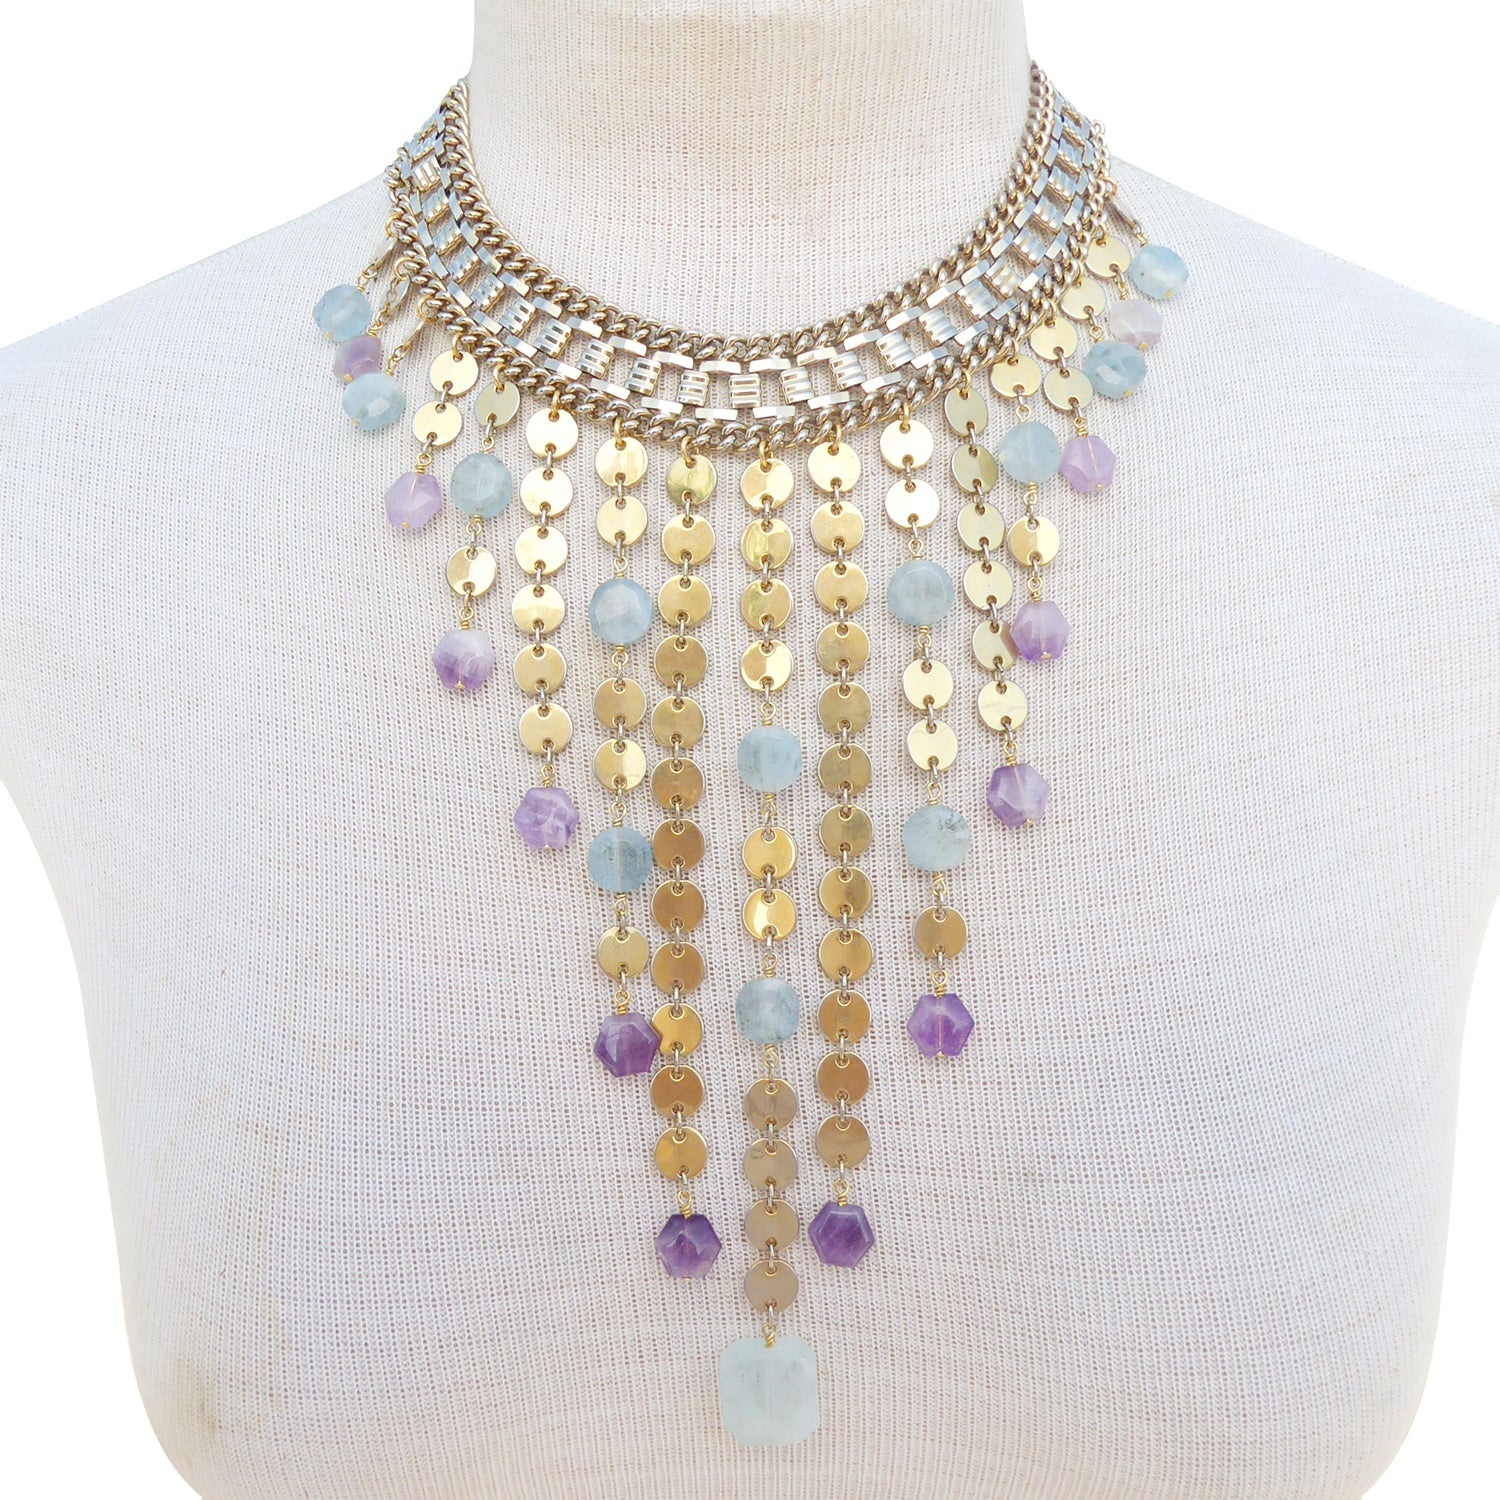 Carmeline aquamarine and amethyst necklace by Jenny Dayco 8